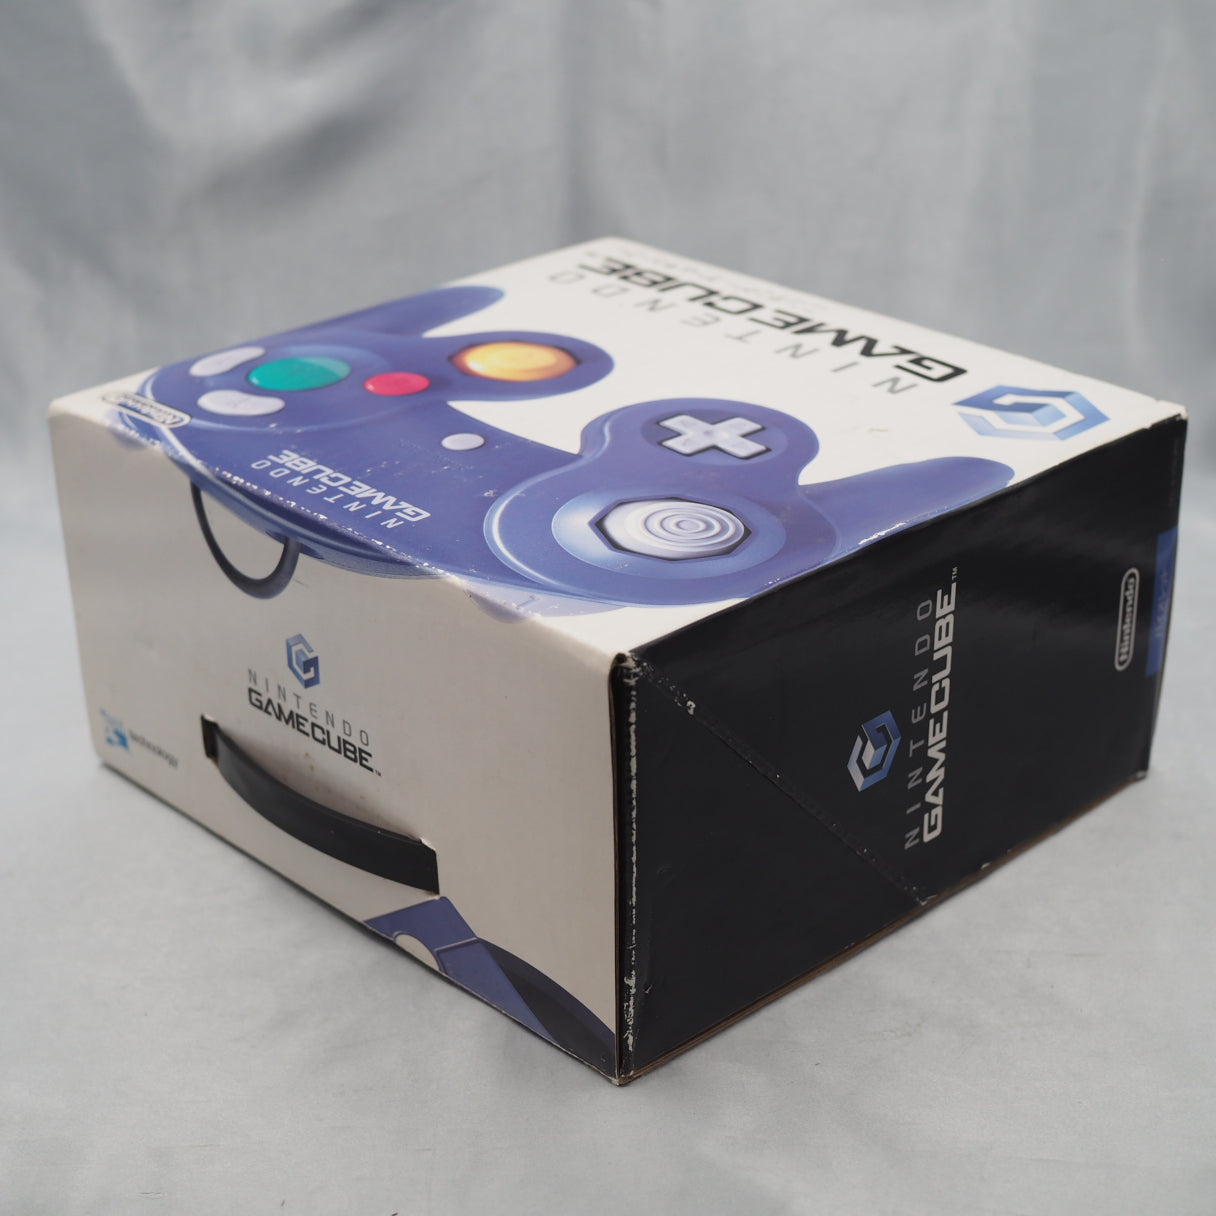 Nintendo GameCube Console System Violet